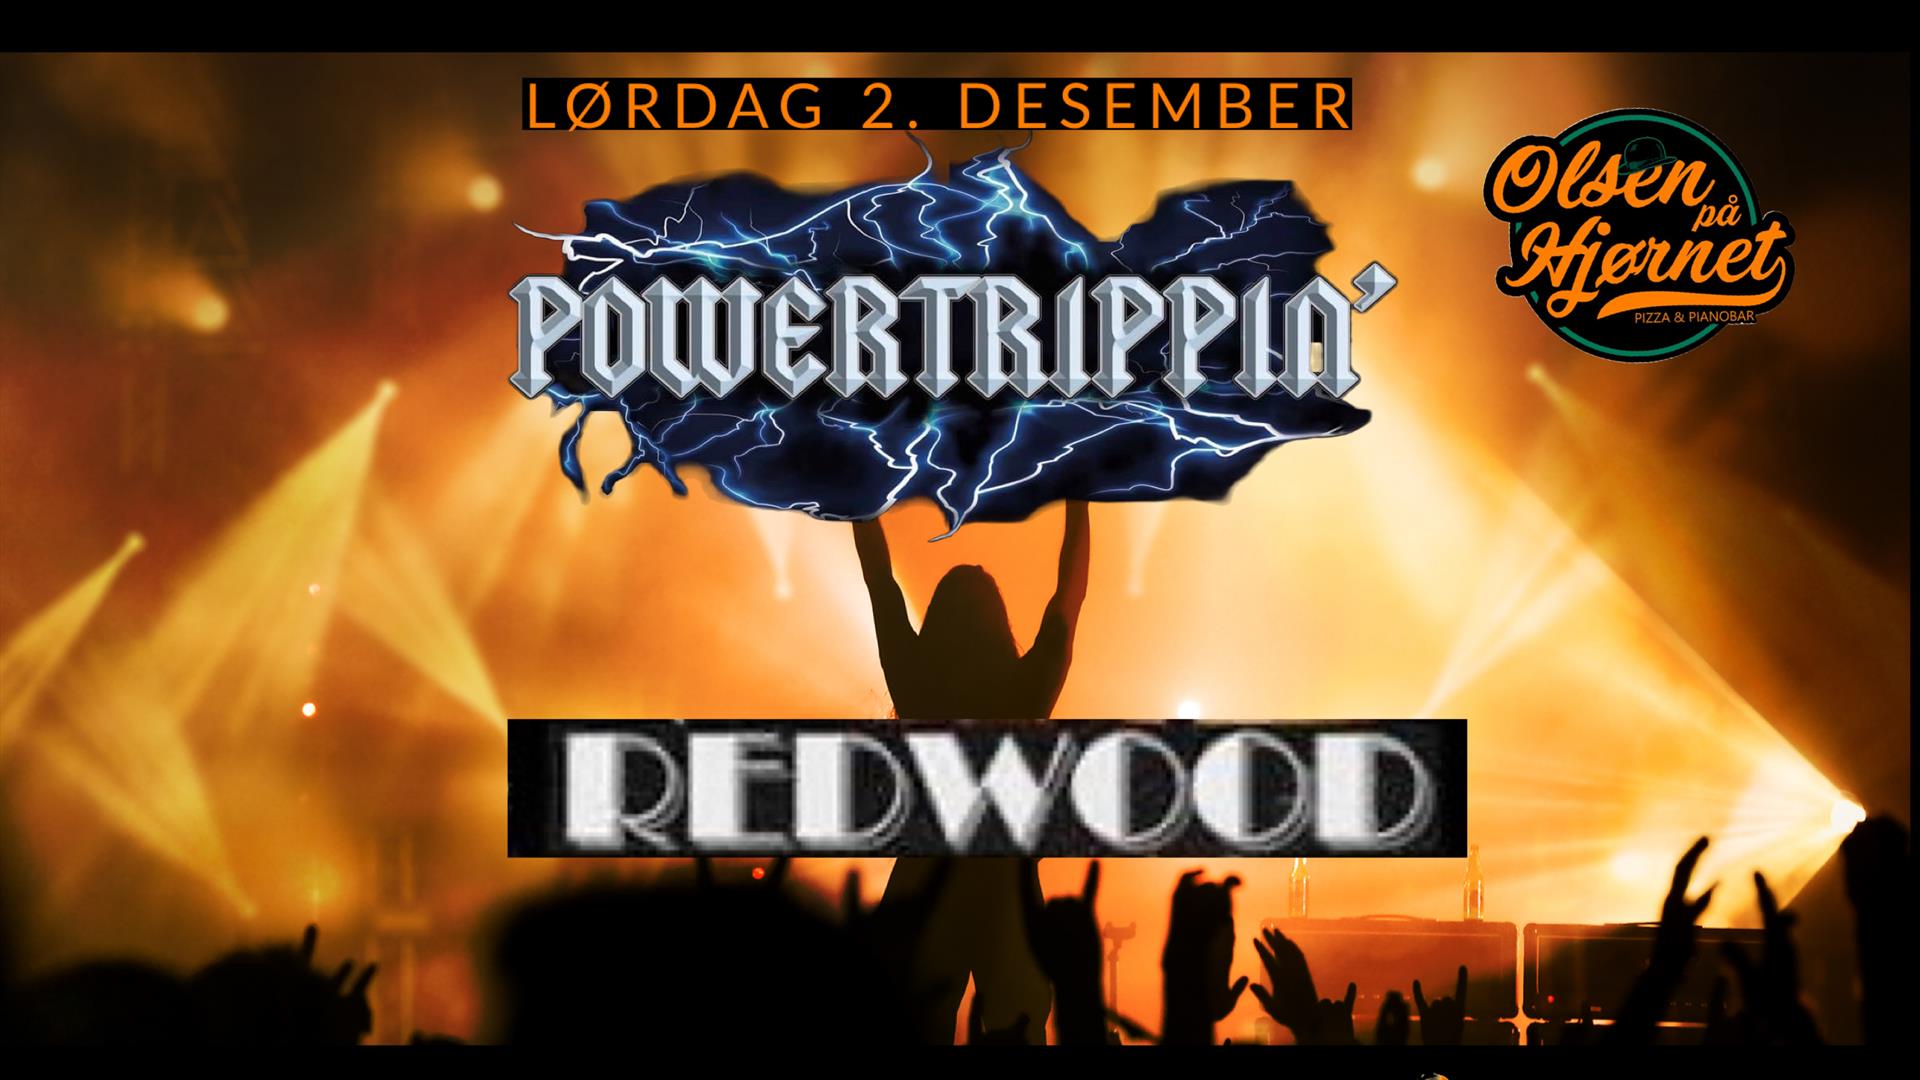 Powertrippin + Redwood